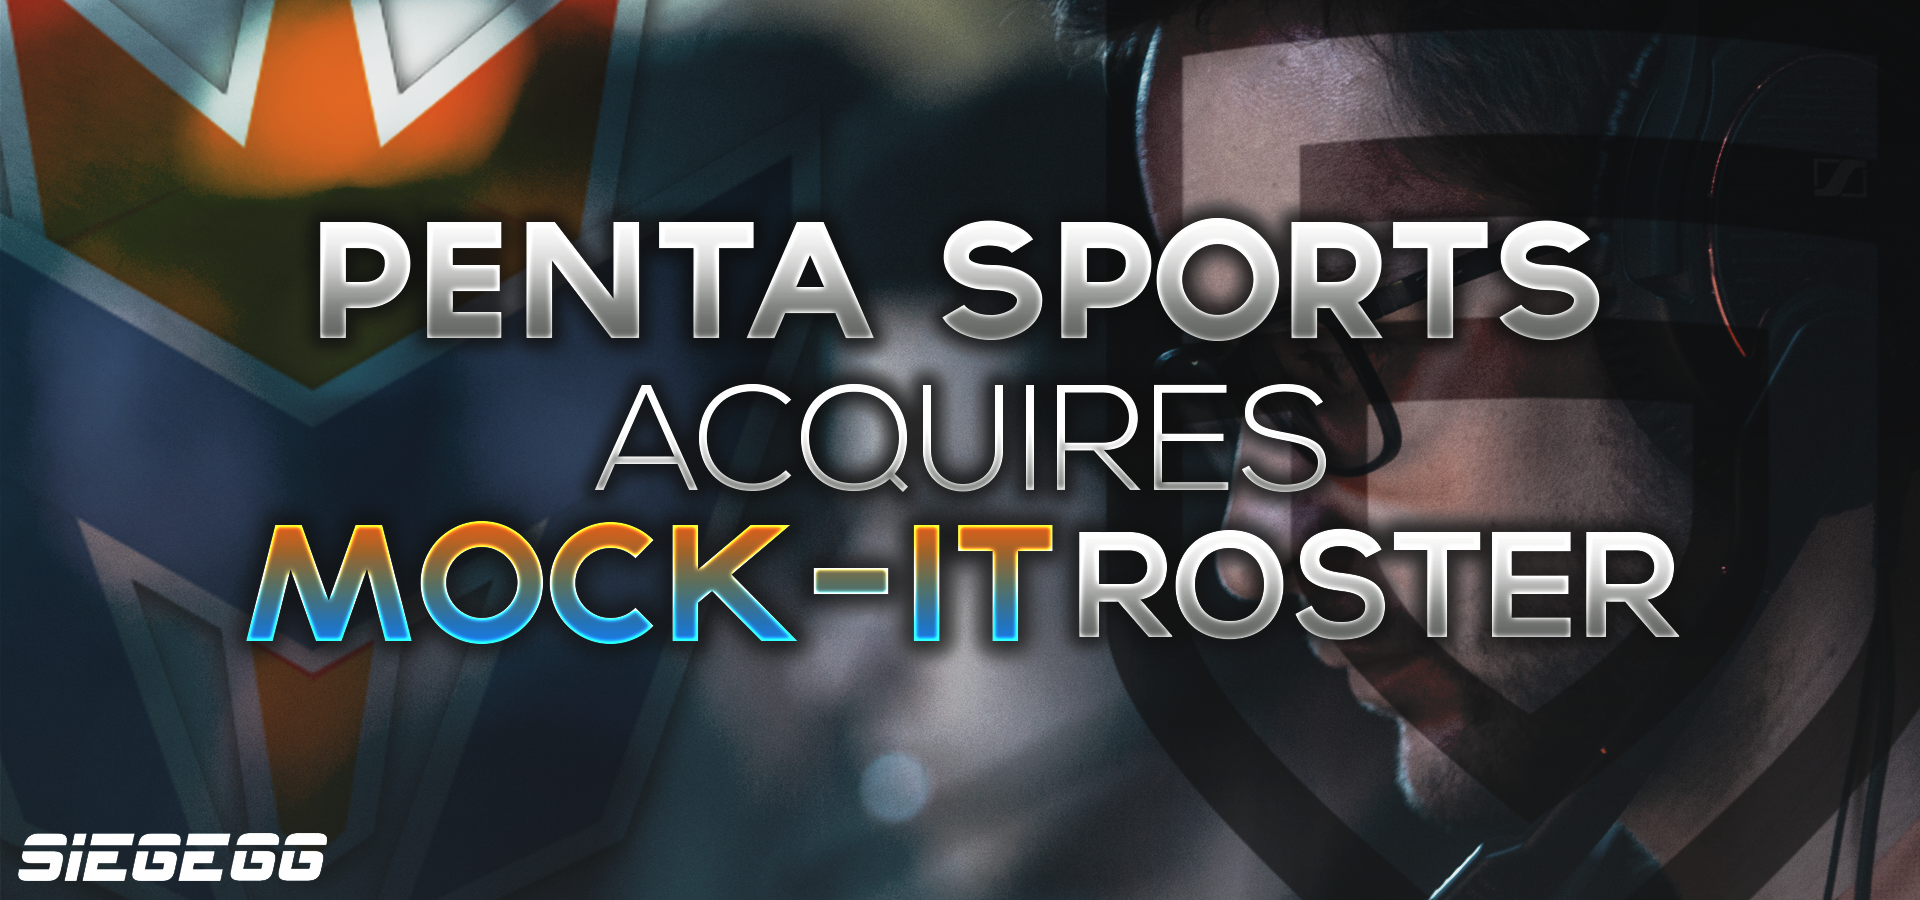 PENTA Sports Picks Up Mock-it Roster